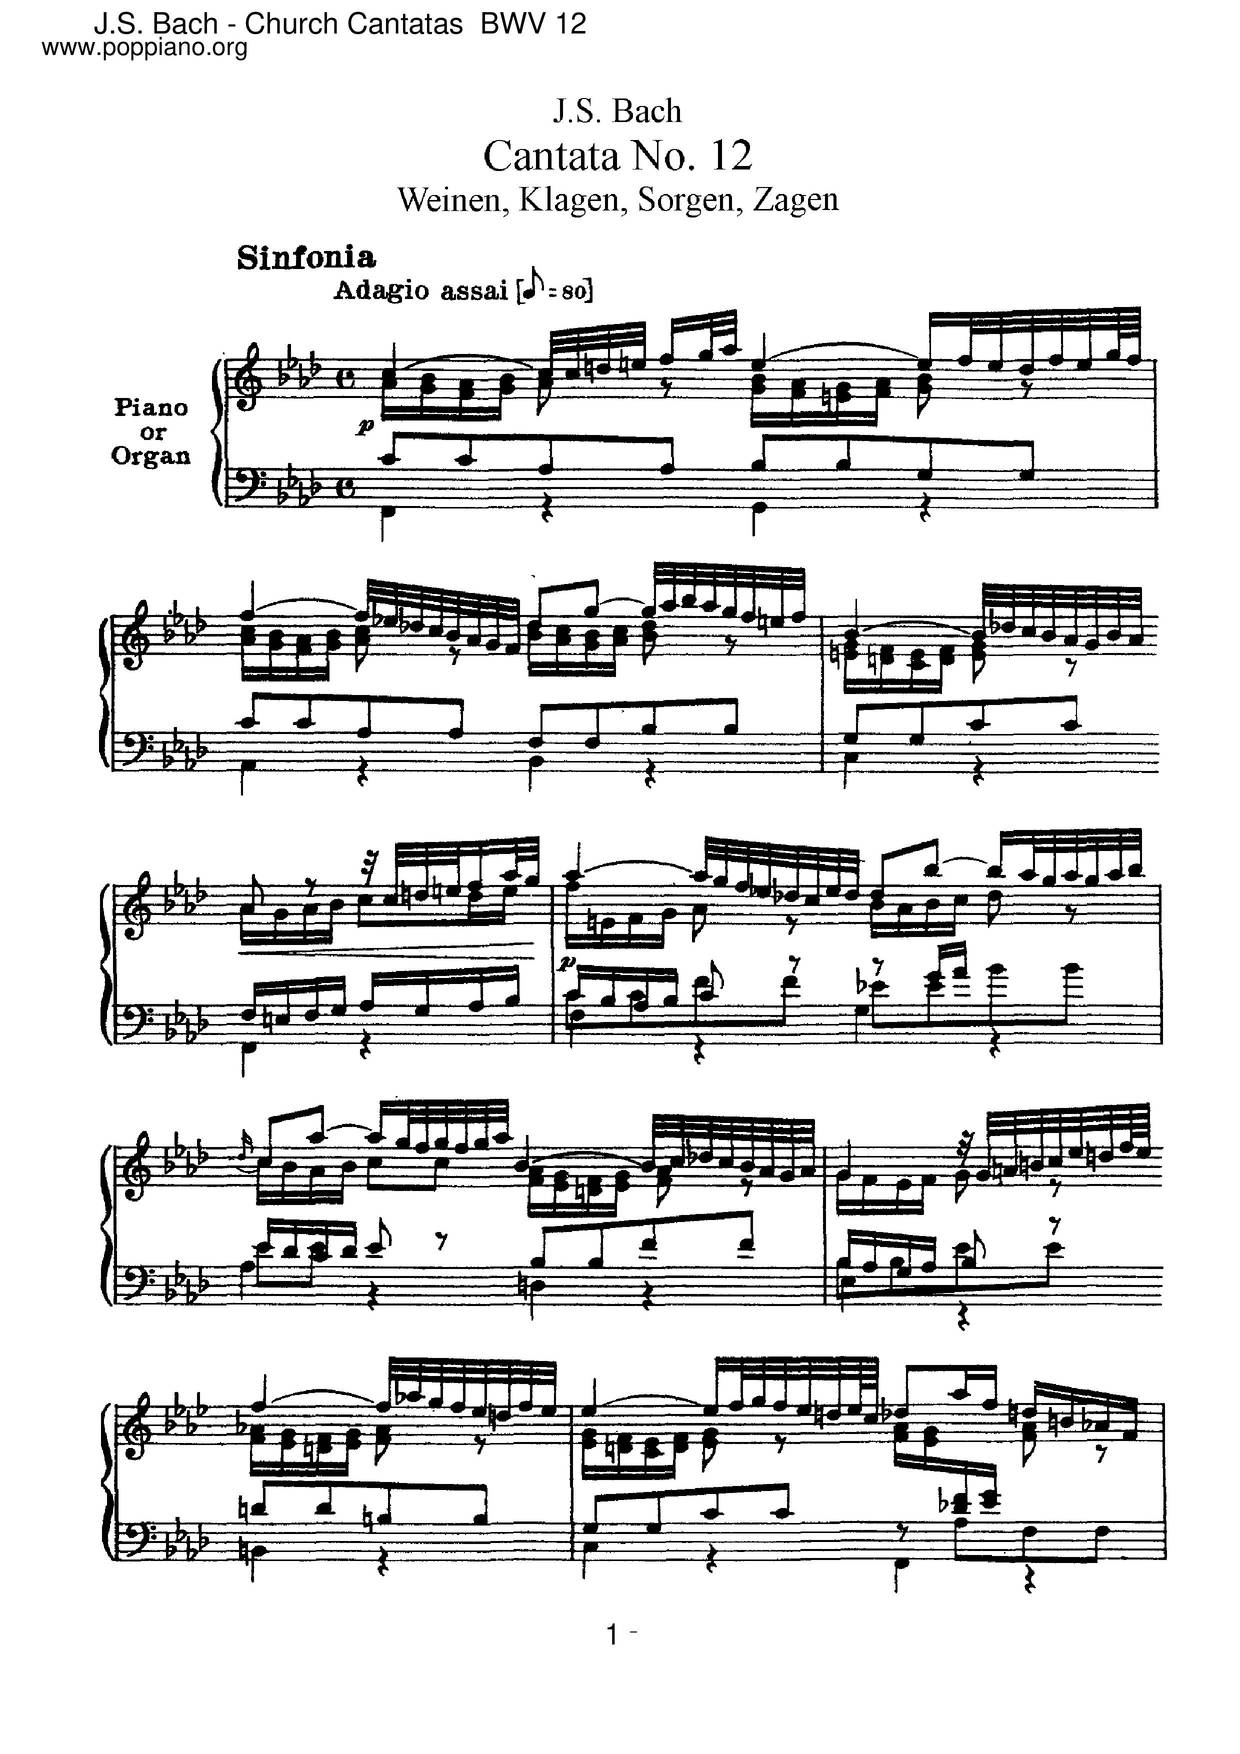 Weinen, Klagen, Sorgen, Zagen, BWV 12 Score